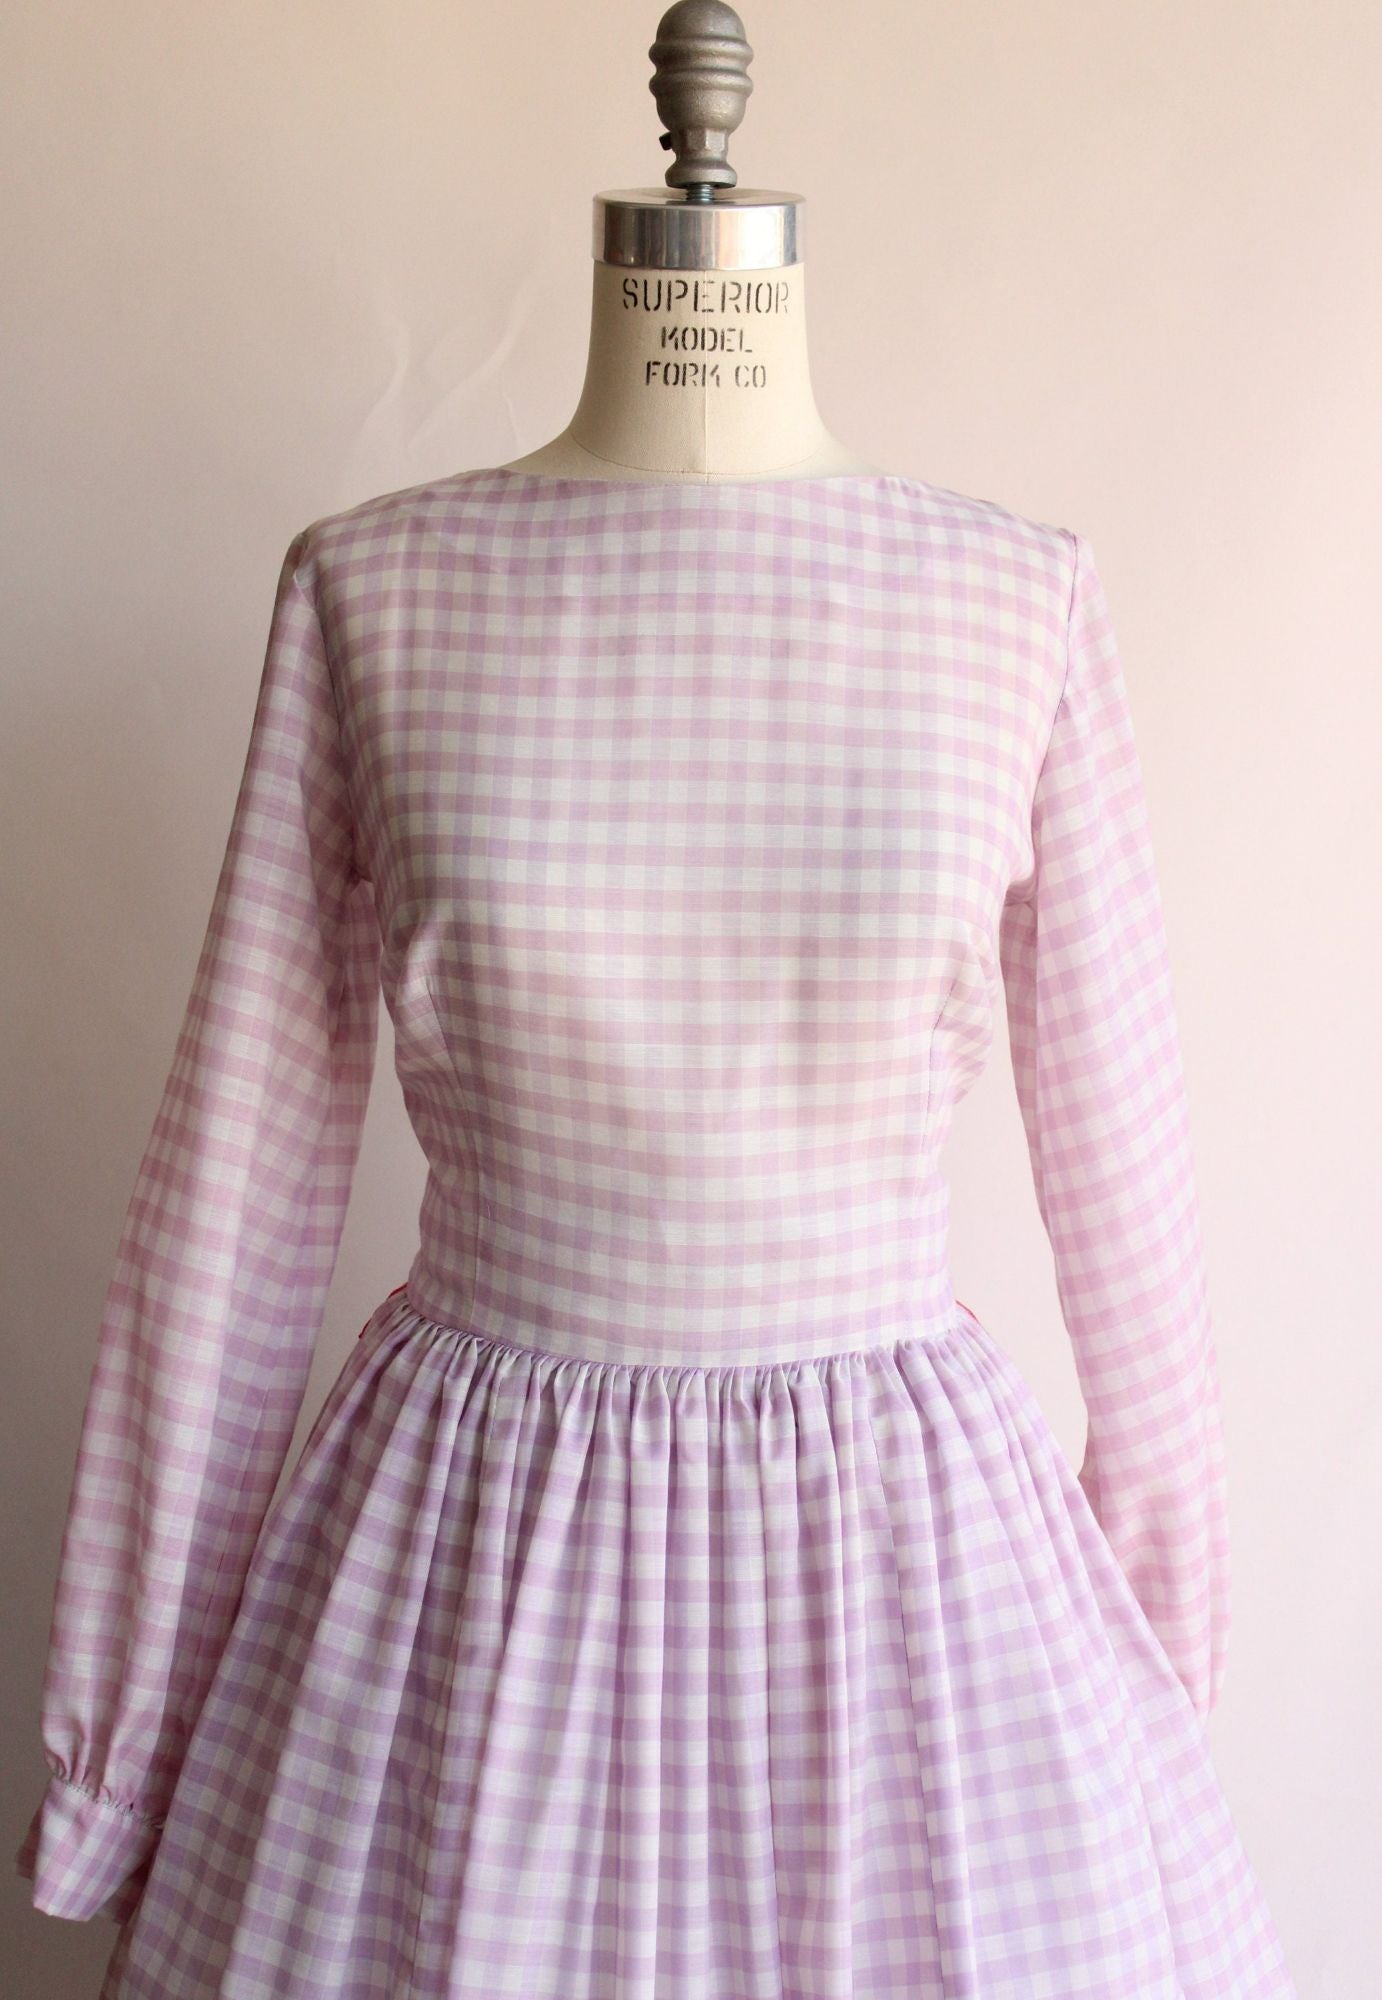 Vintage 1950s 1960s John Weitz Purple Gingham Check Cotton Dress